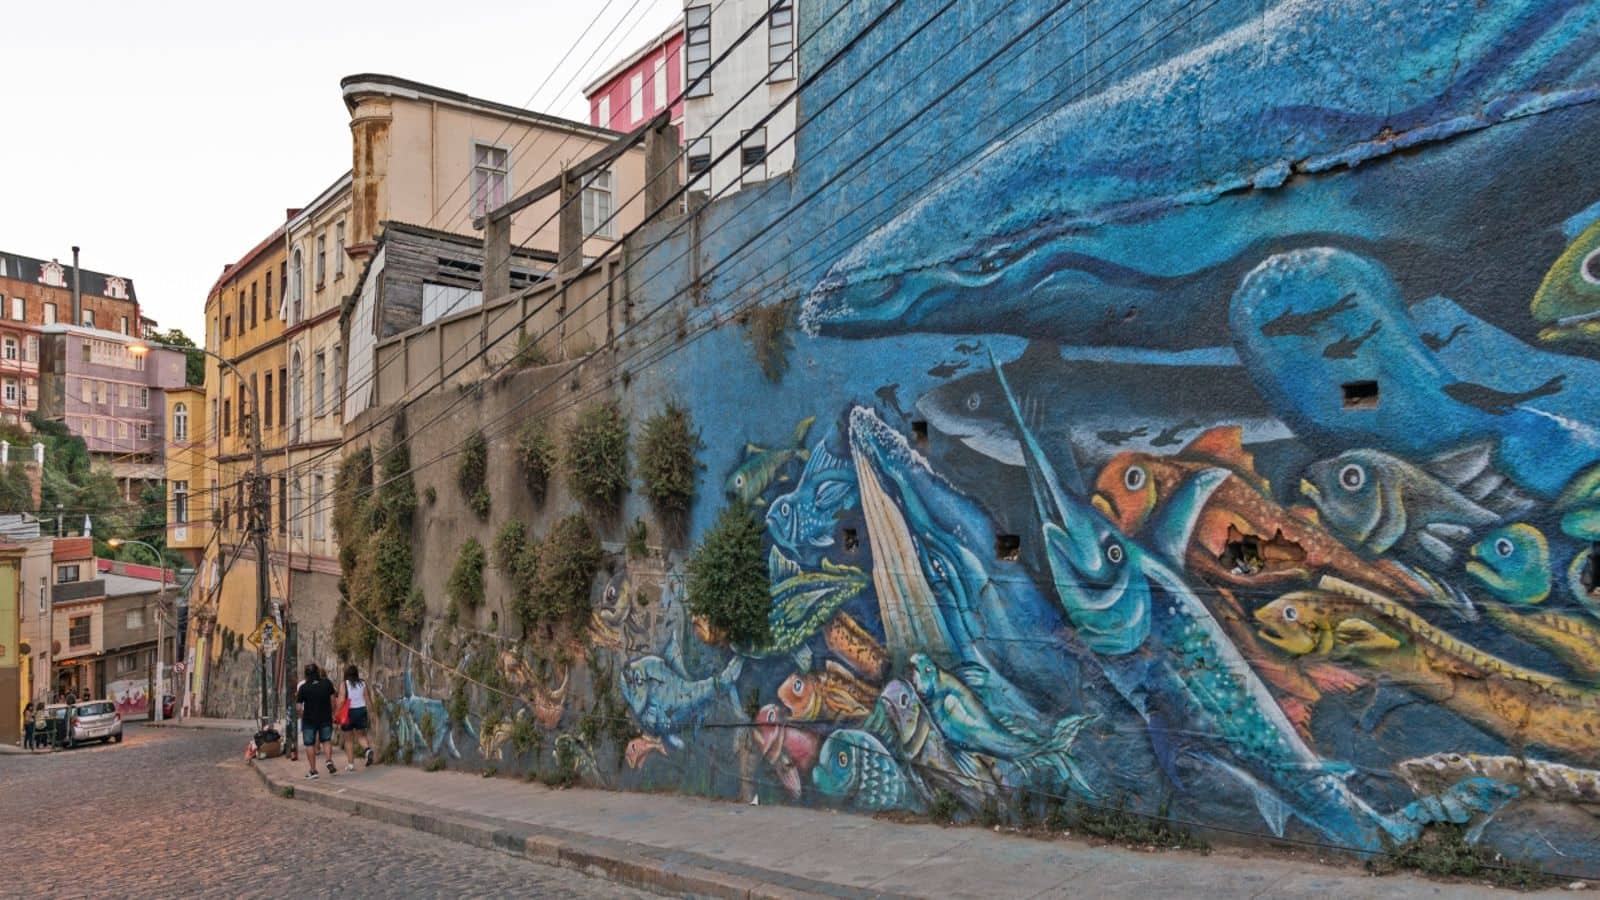 Valparaiso, Chile is a canvas of urban street art